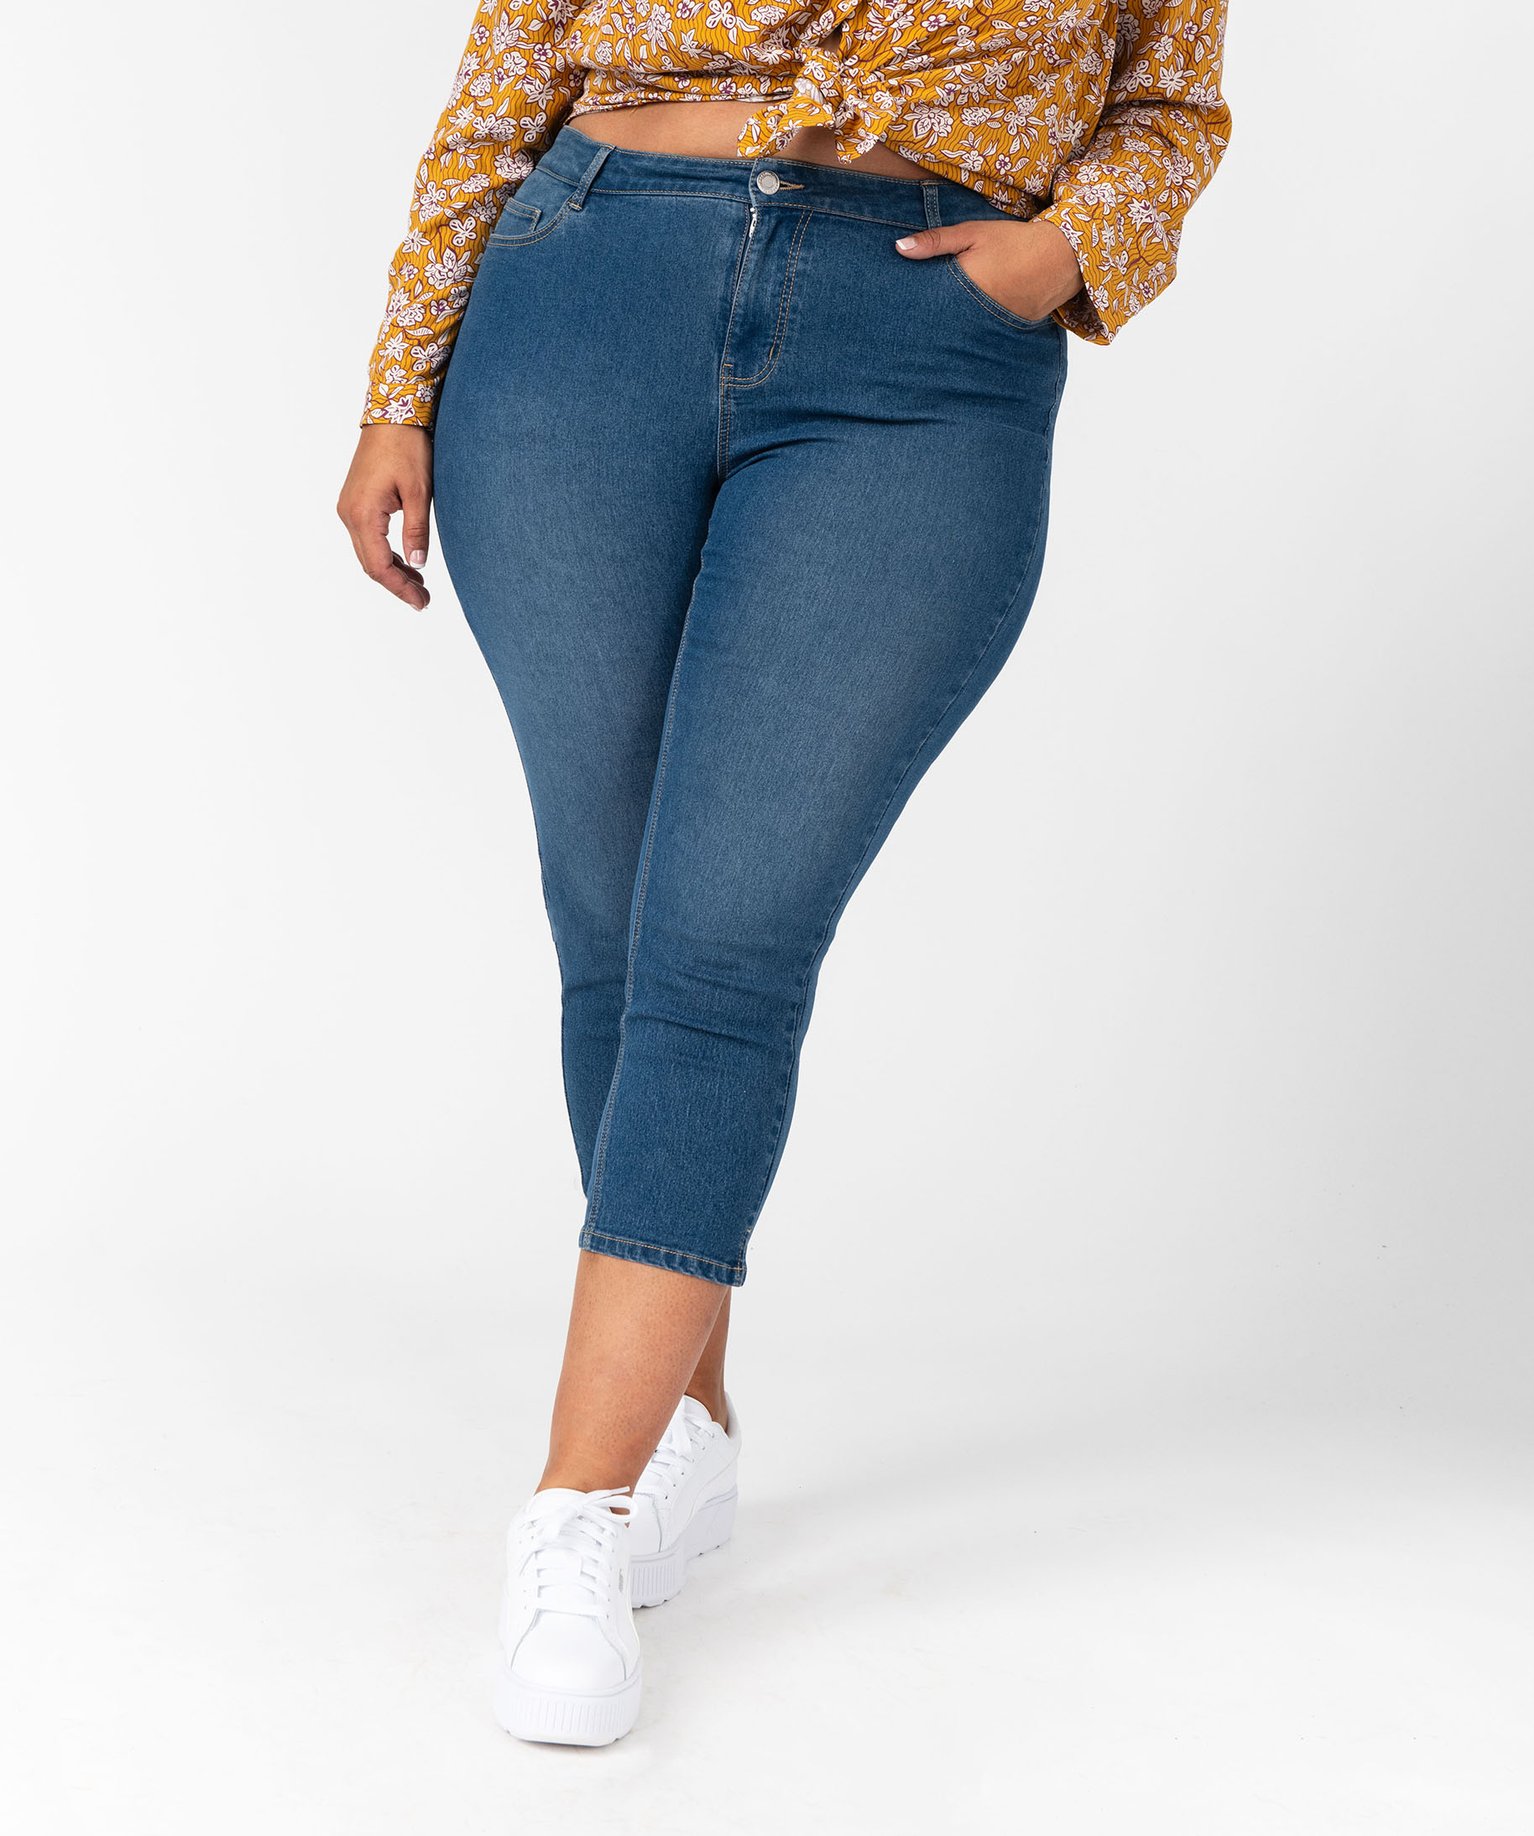 pantacourt en jean stretch coupe slim taille normale femme grande taille gris pantacourts